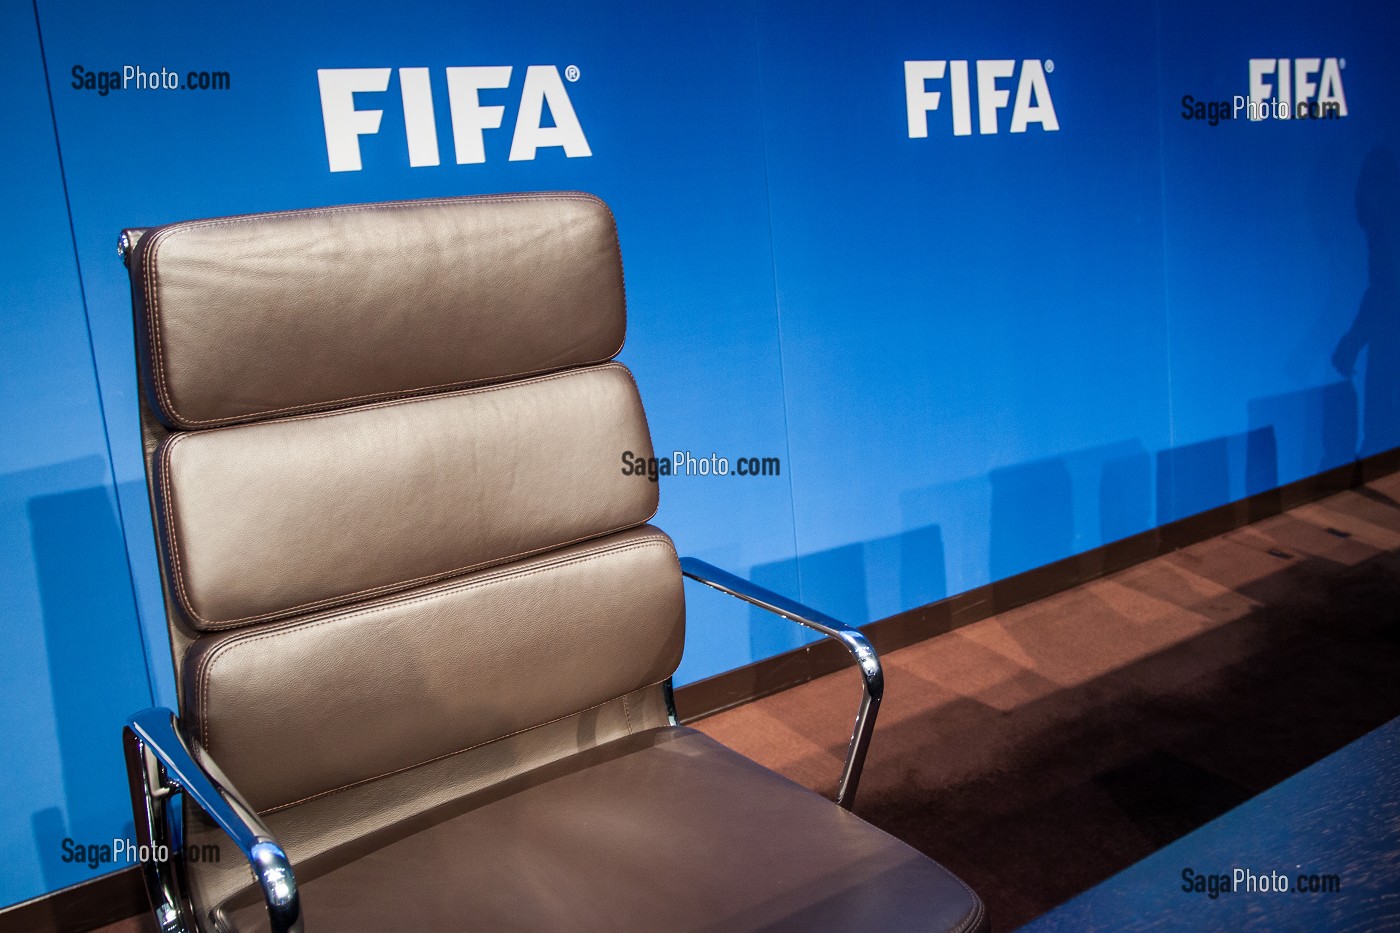 SIEGE DE LA FIFA, FEDERATION INTERNATIONALE DE FOOTBALL ASSOCIATION, ZURICH 